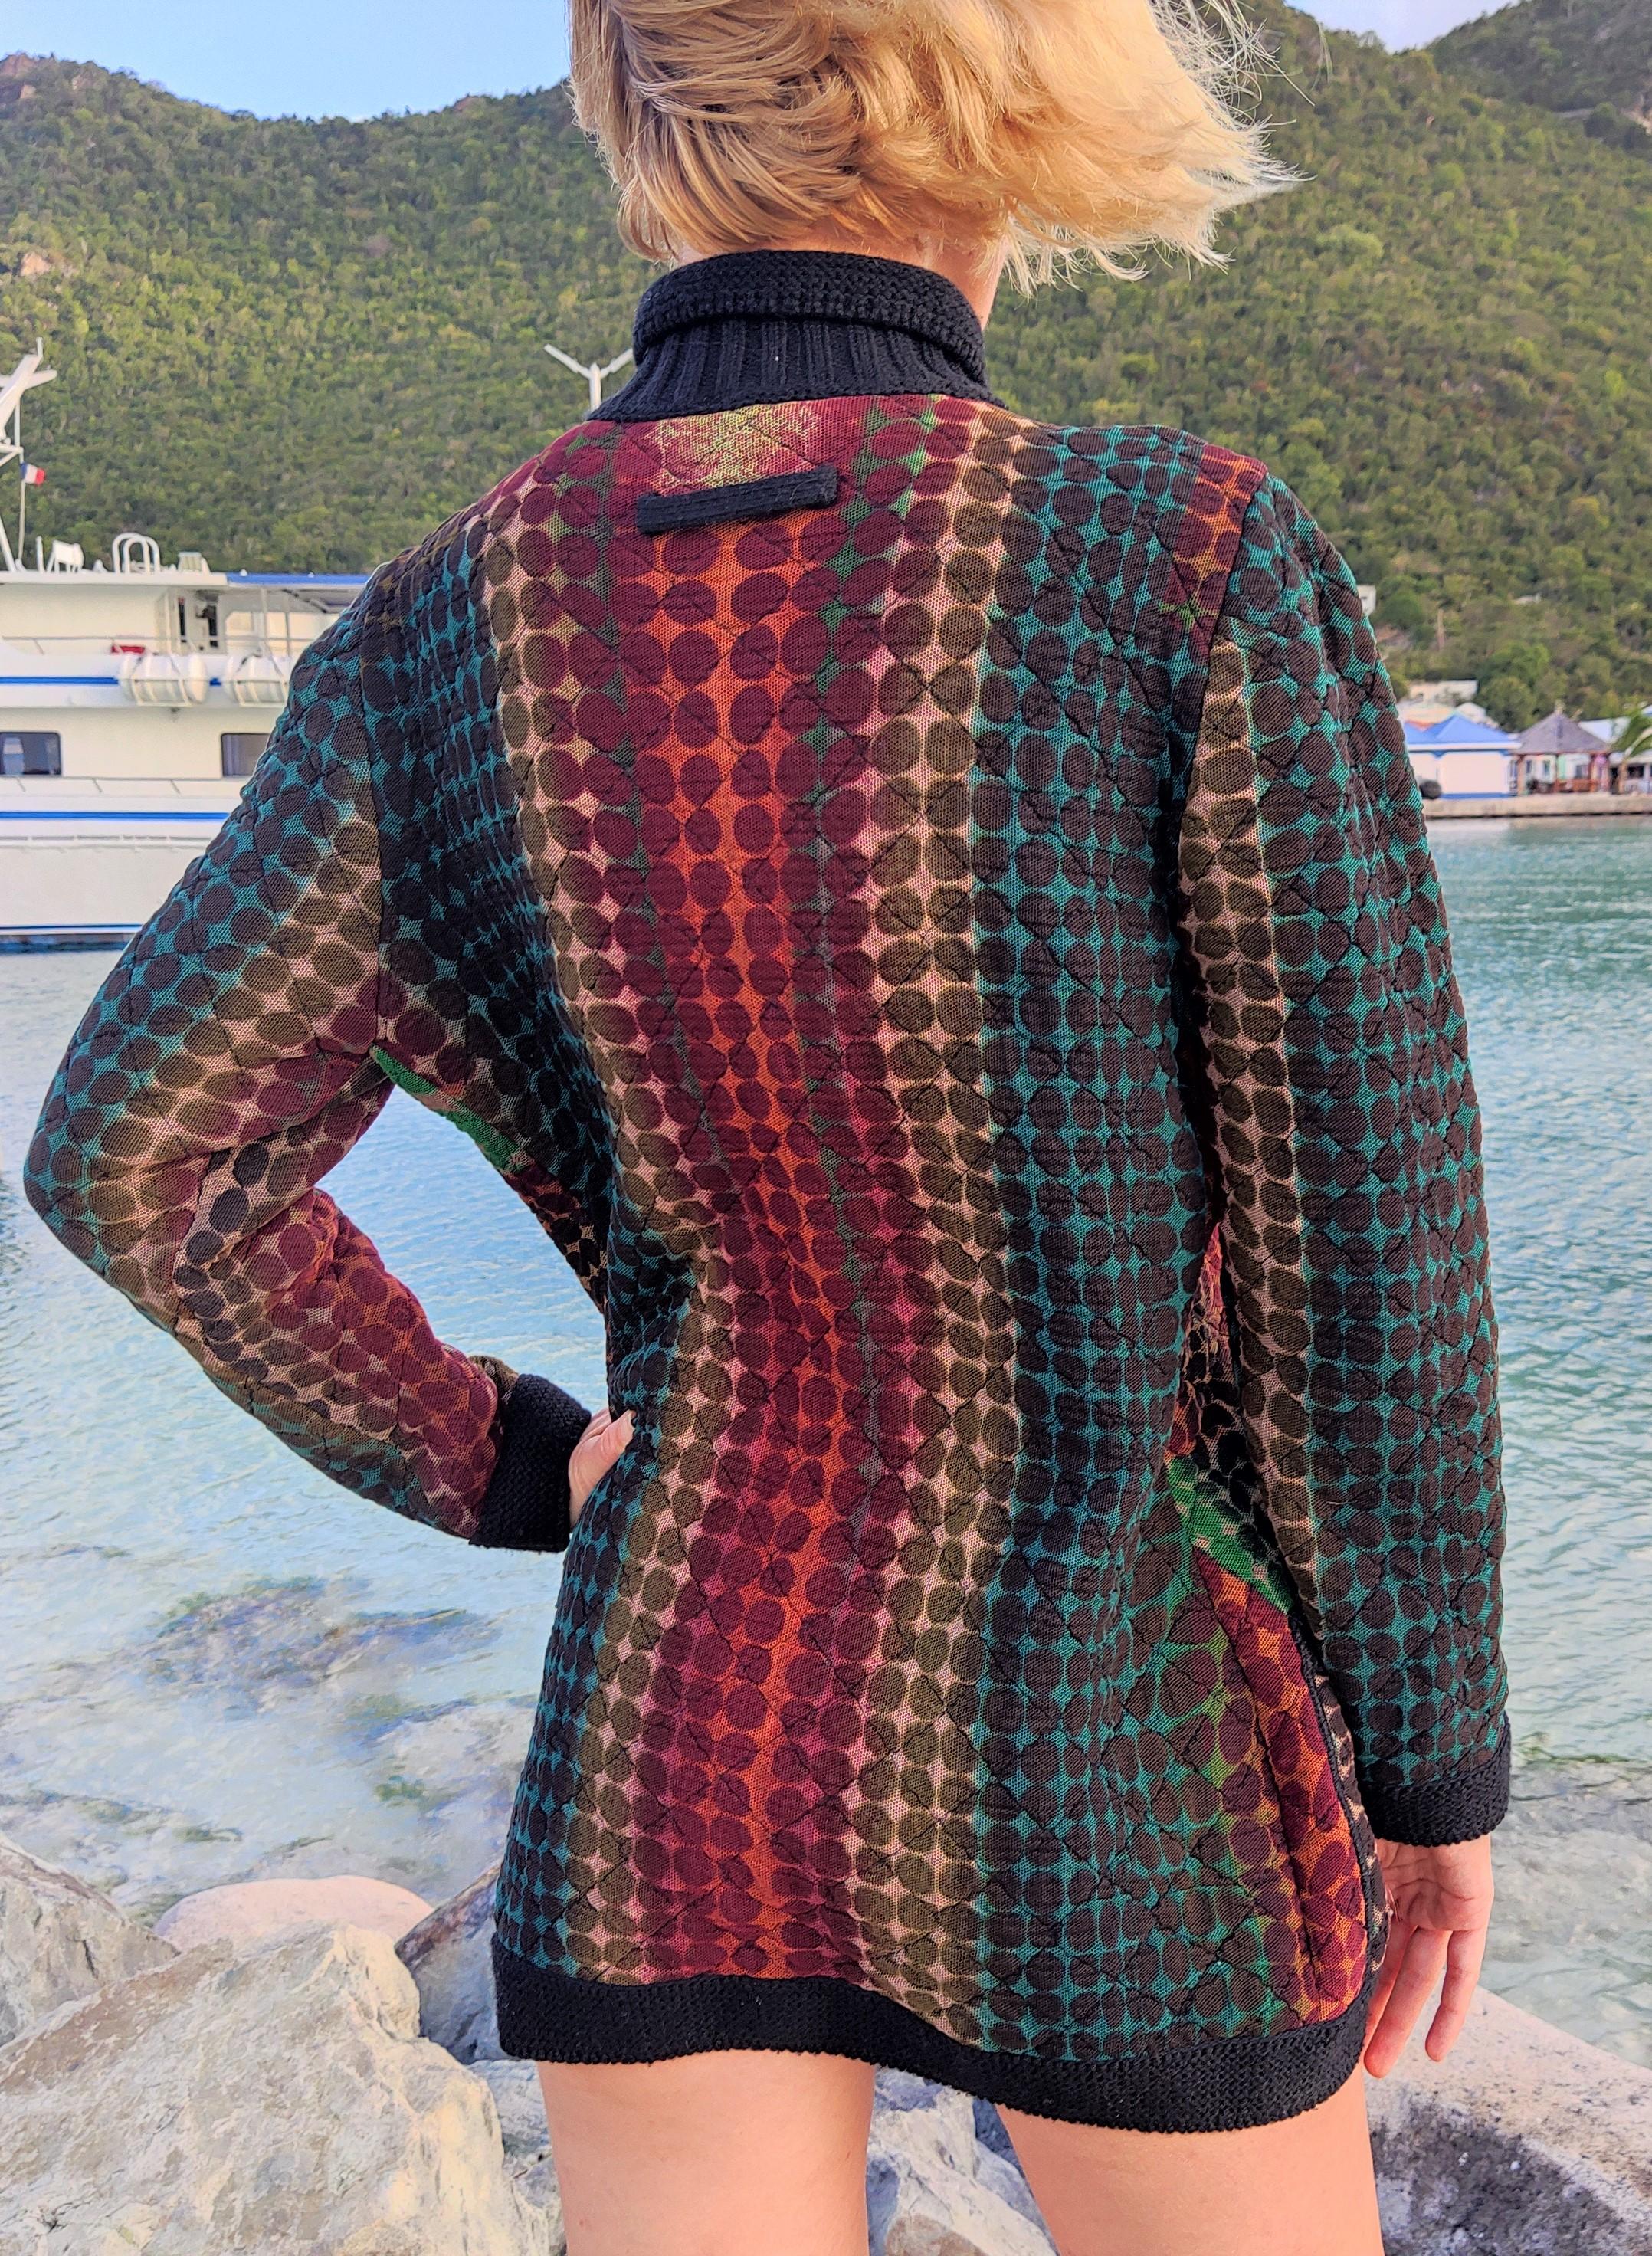 Jean Paul Gaultier Cyberbaba Cyberdot Optical Illusion 1995 Coat Jacket Dress For Sale 3